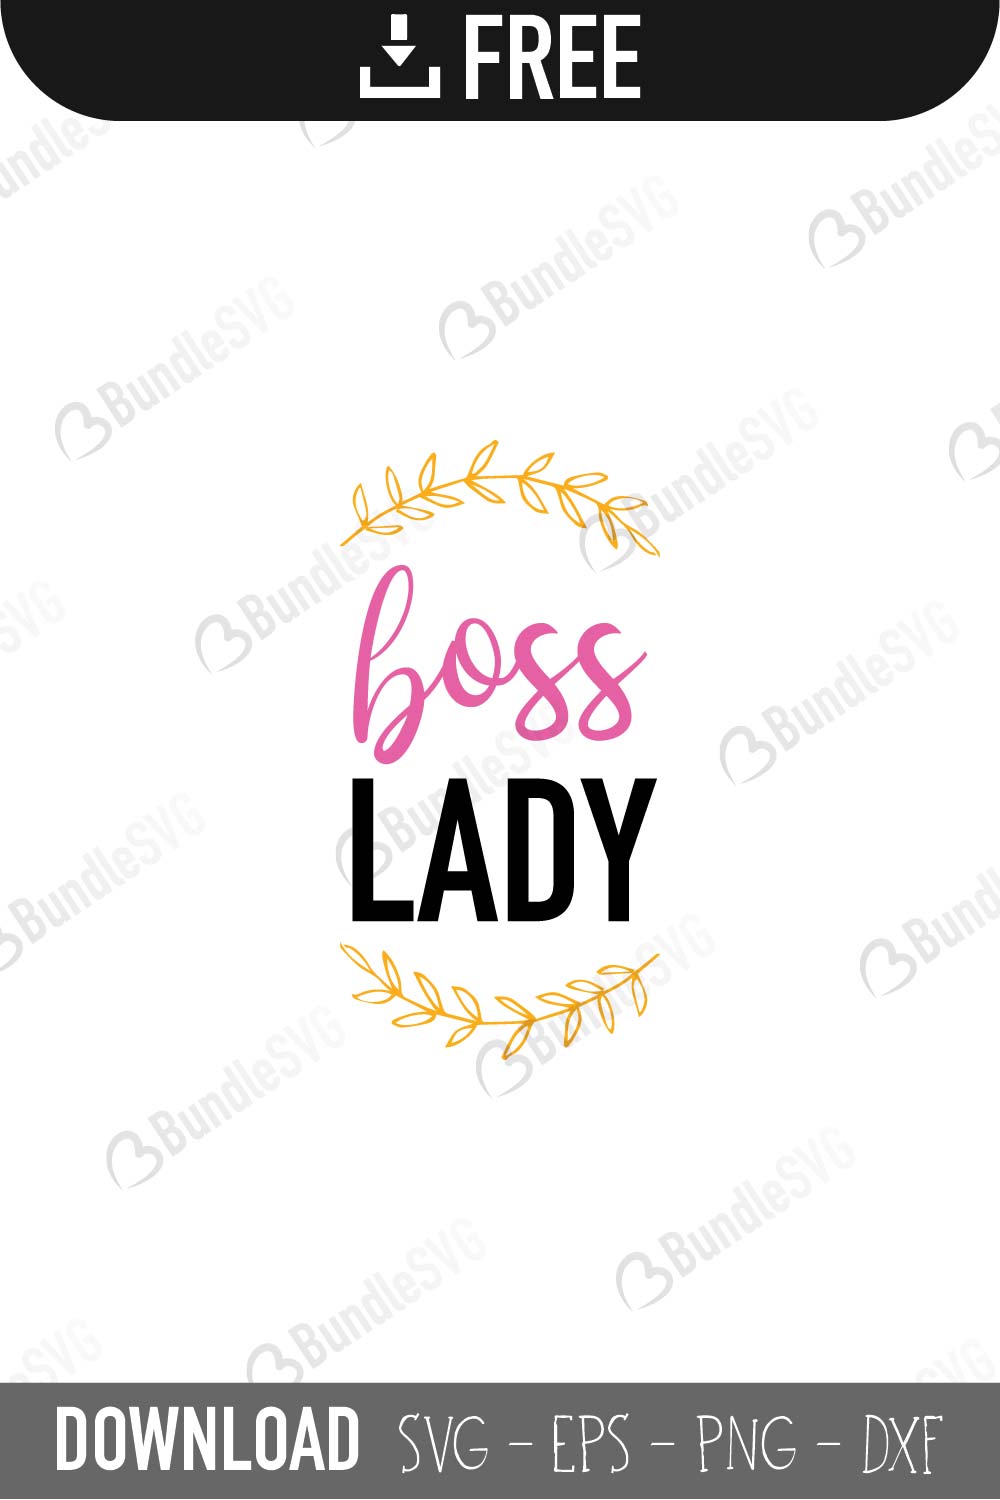 Download Free Boss Lady SVG Cut Files | BundleSVG.com